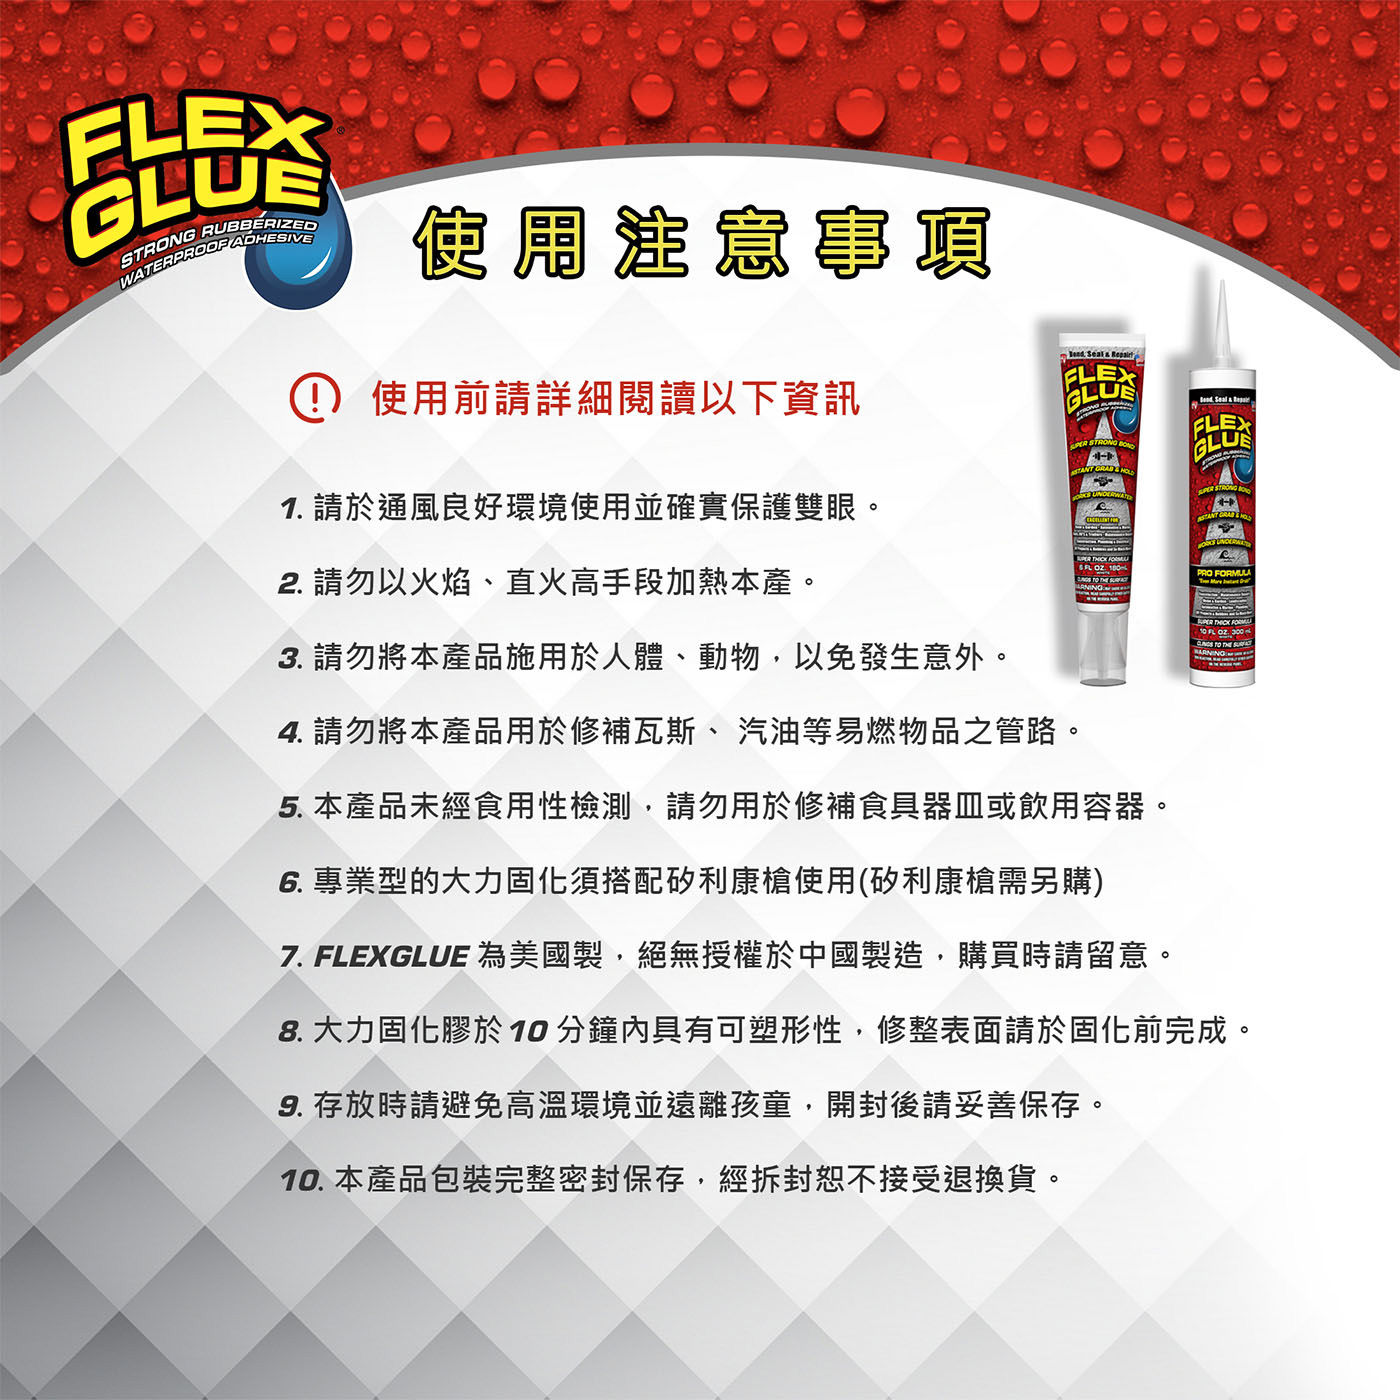 FLEX GLUE 大力固化膠透明，美國製造，原裝進口包裝，非傳統膠類，膠質穩定強韌、耐候性強、持久、強固，速乾配方、接著後快速固化，穩固牢靠。